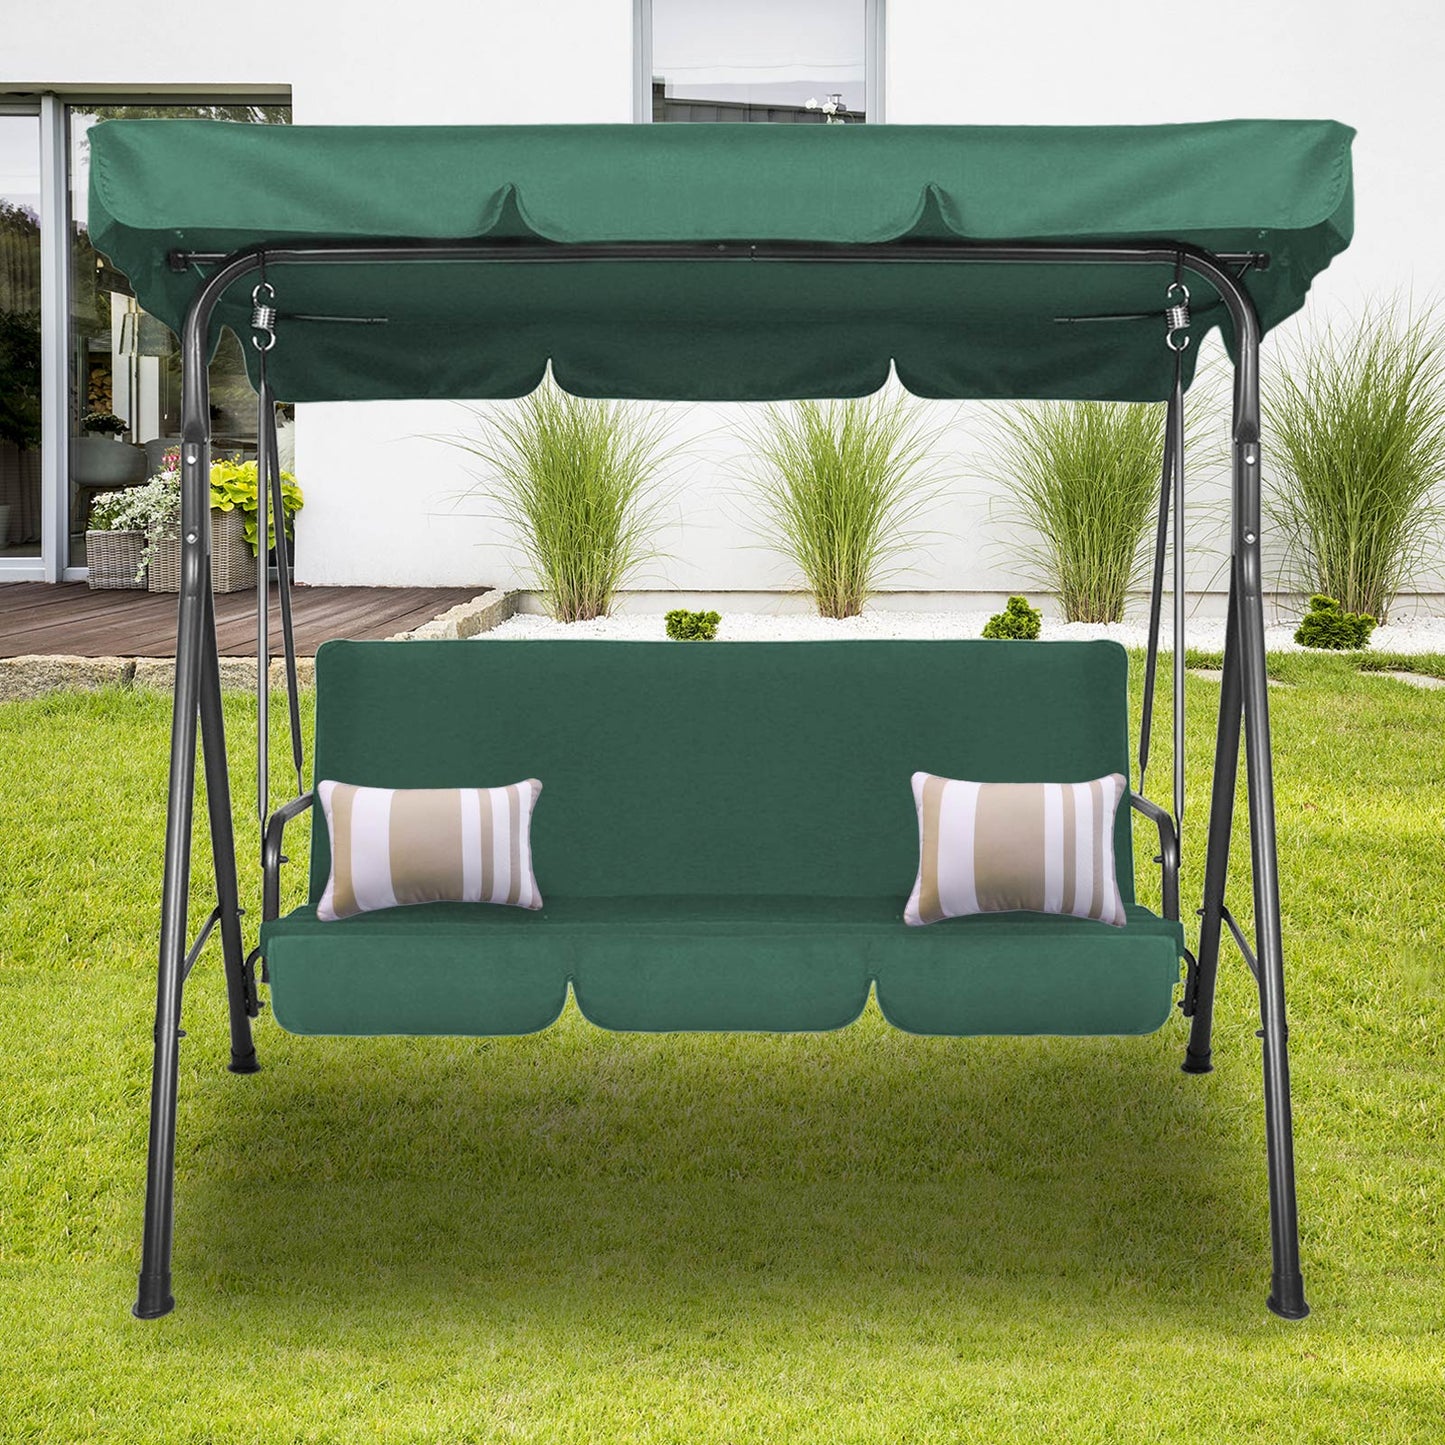 Milano Outdoor Swing Bench Seat Chair Canopy Furniture 3 Seater Garden Hammock - Dark Green - image2